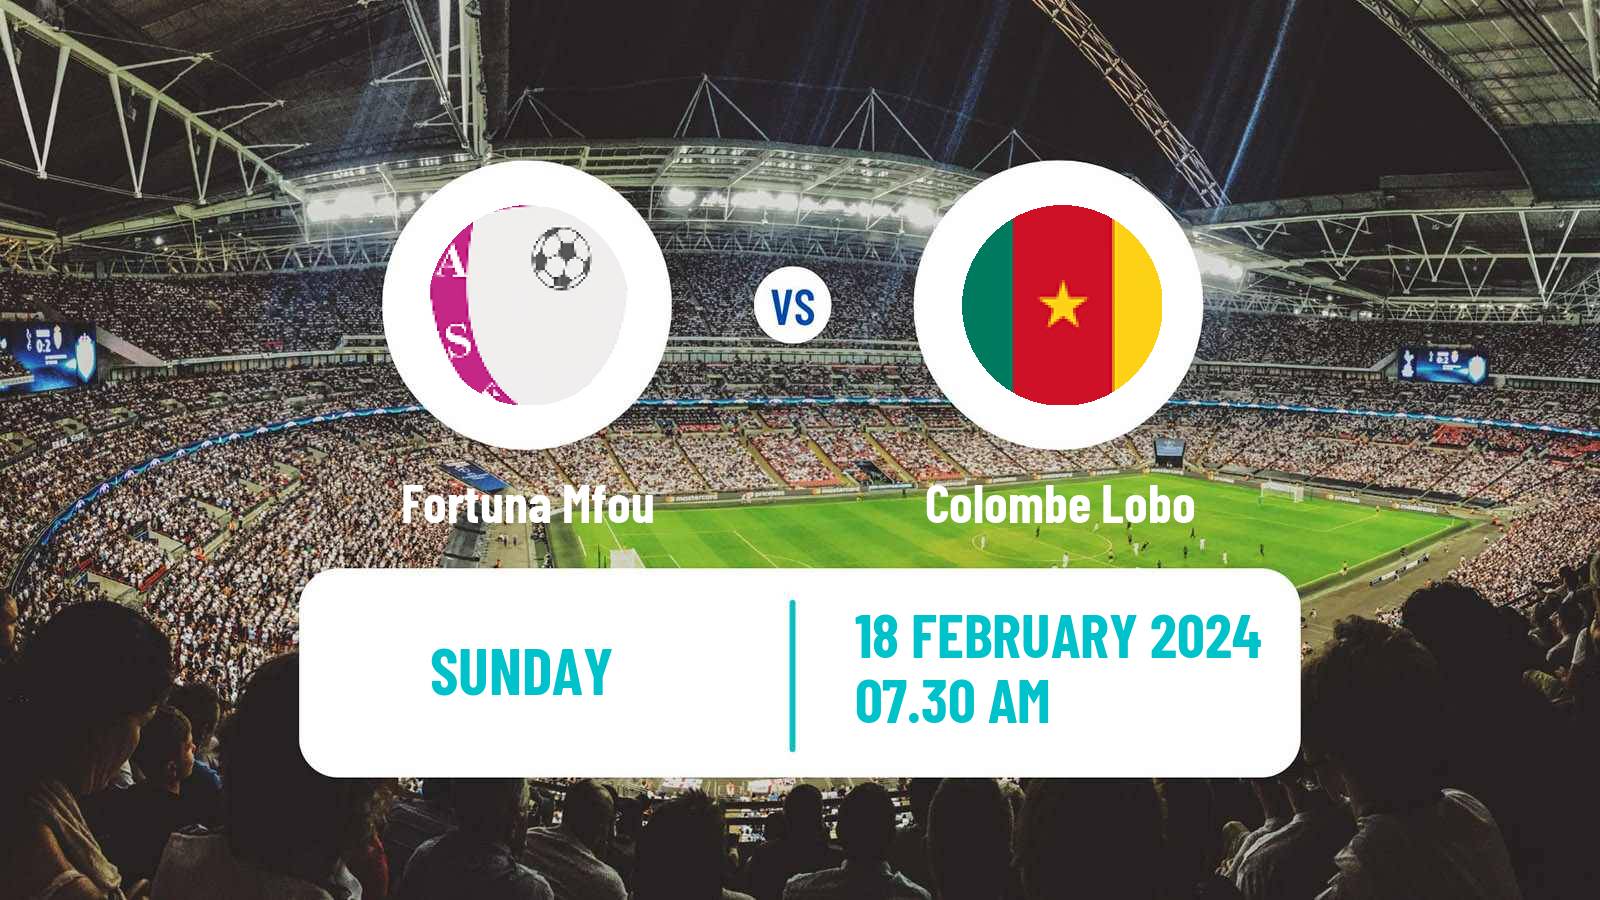 Soccer Cameroon Elite One Fortuna Mfou - Colombe Lobo